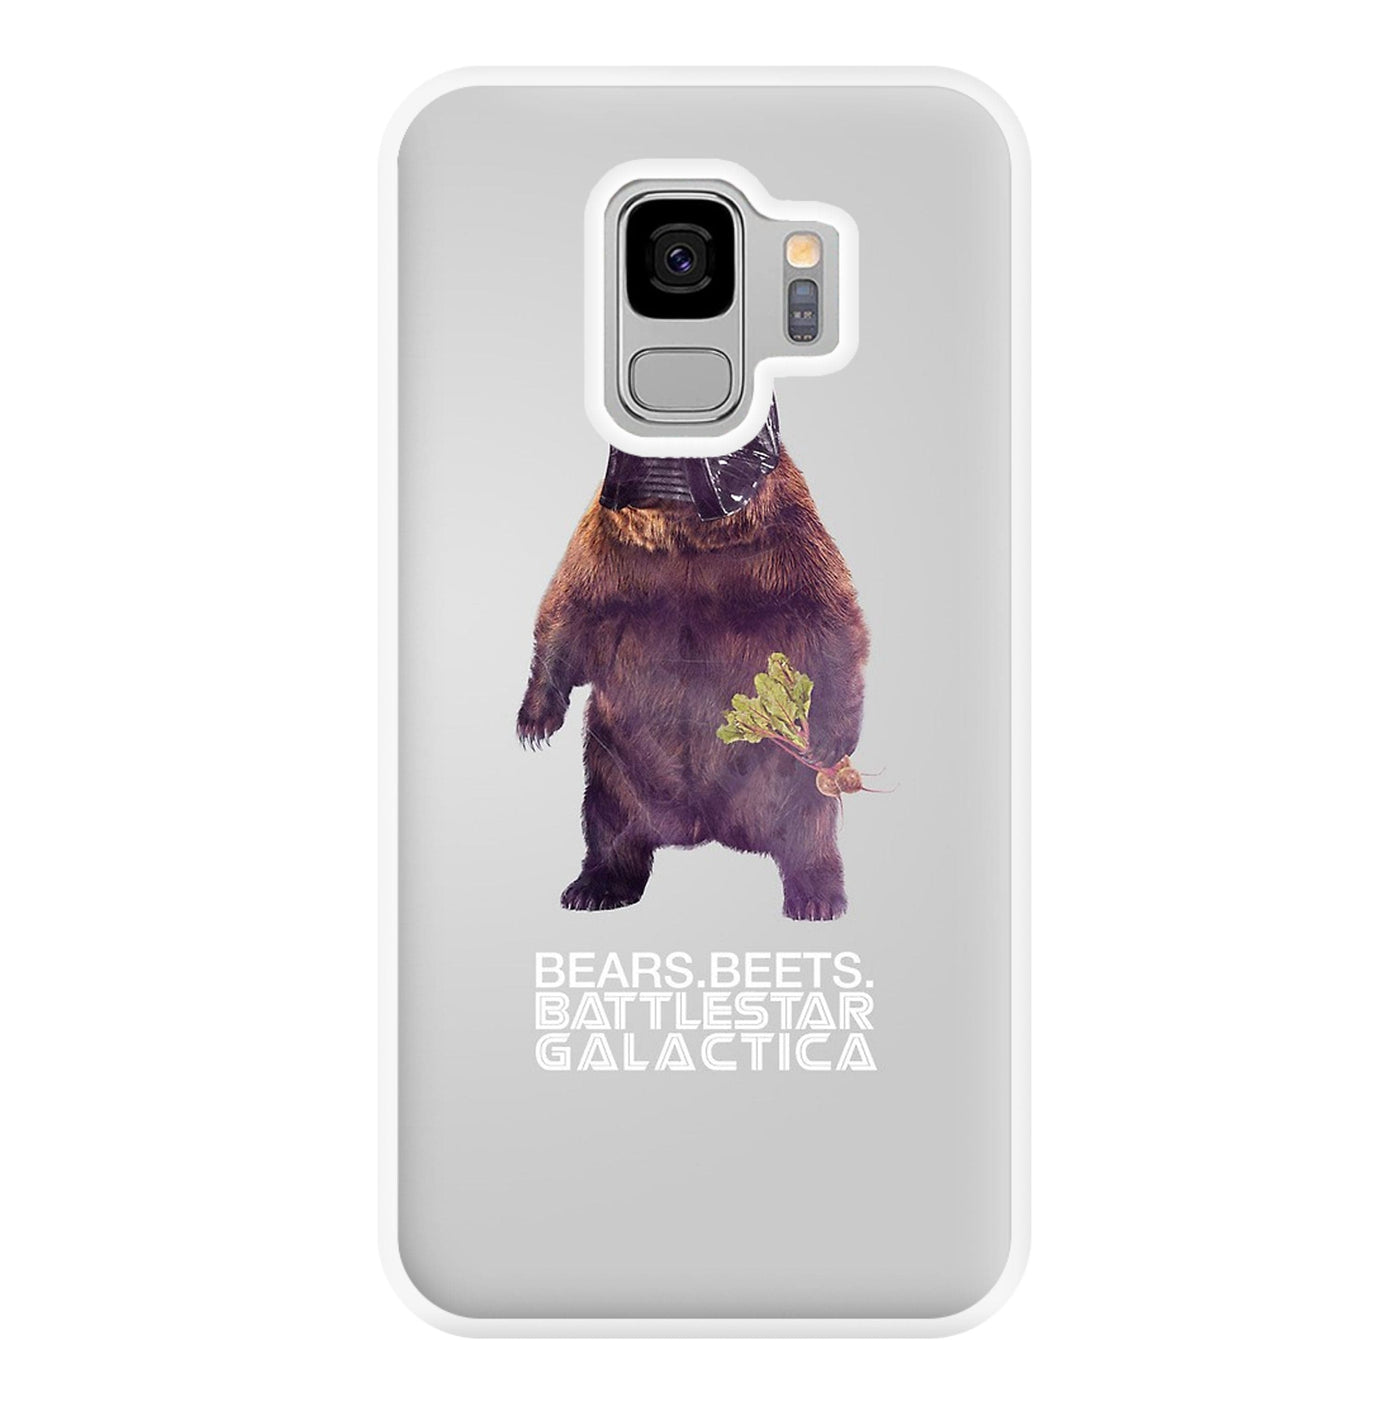 Bears Beets Battlestar Galactica - The Office Phone Case